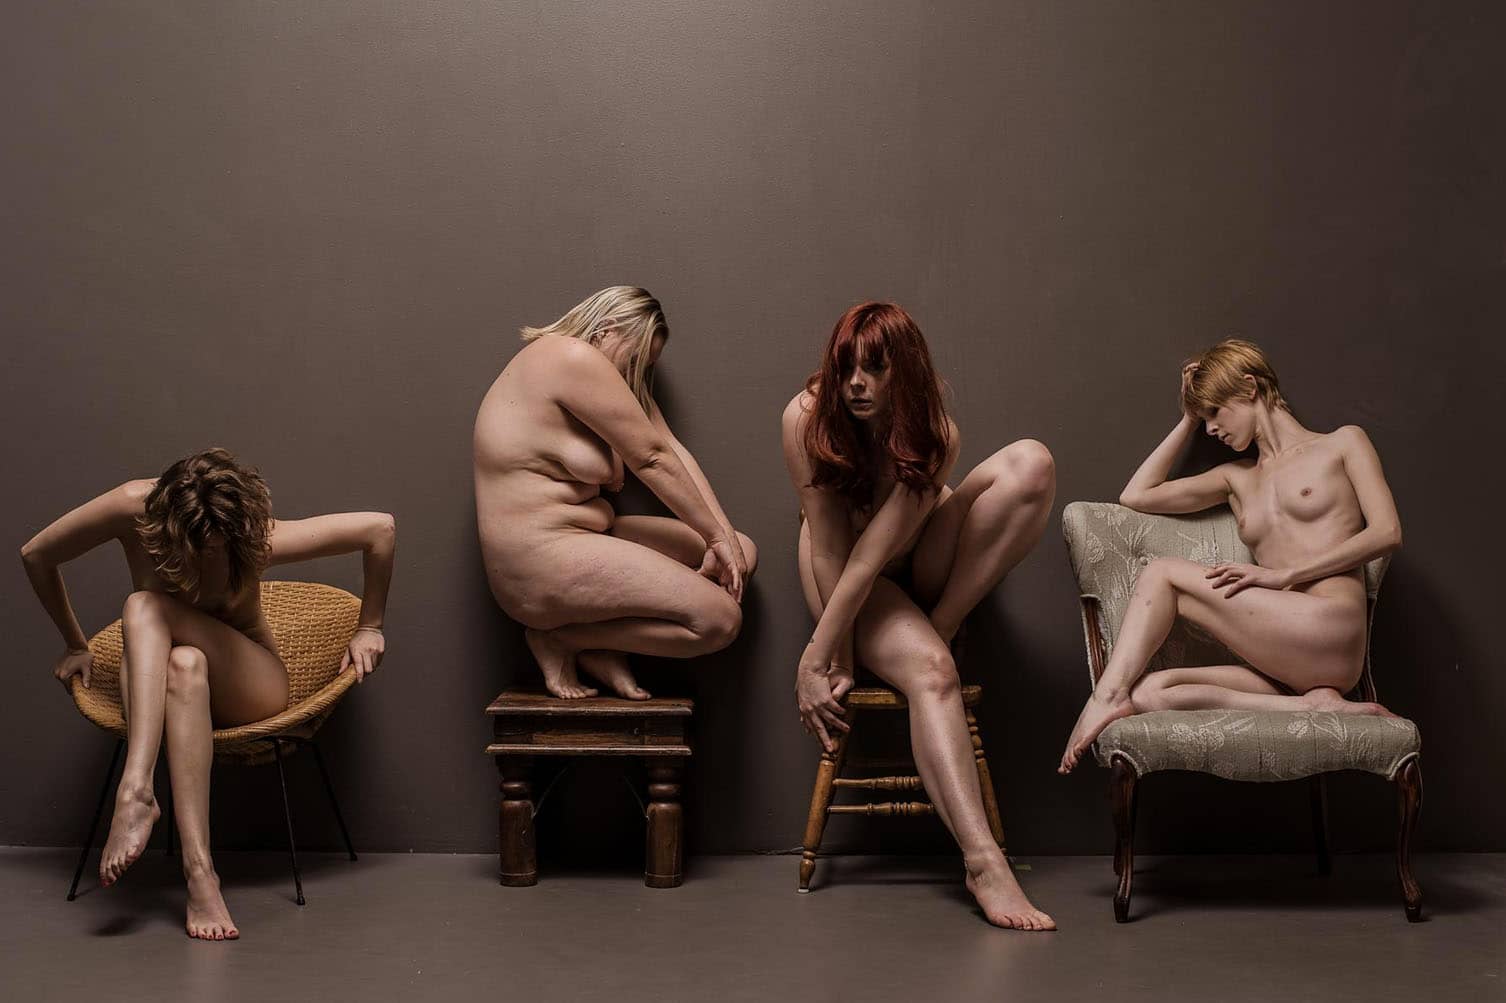 Rob Caleffi on Art Nude Today